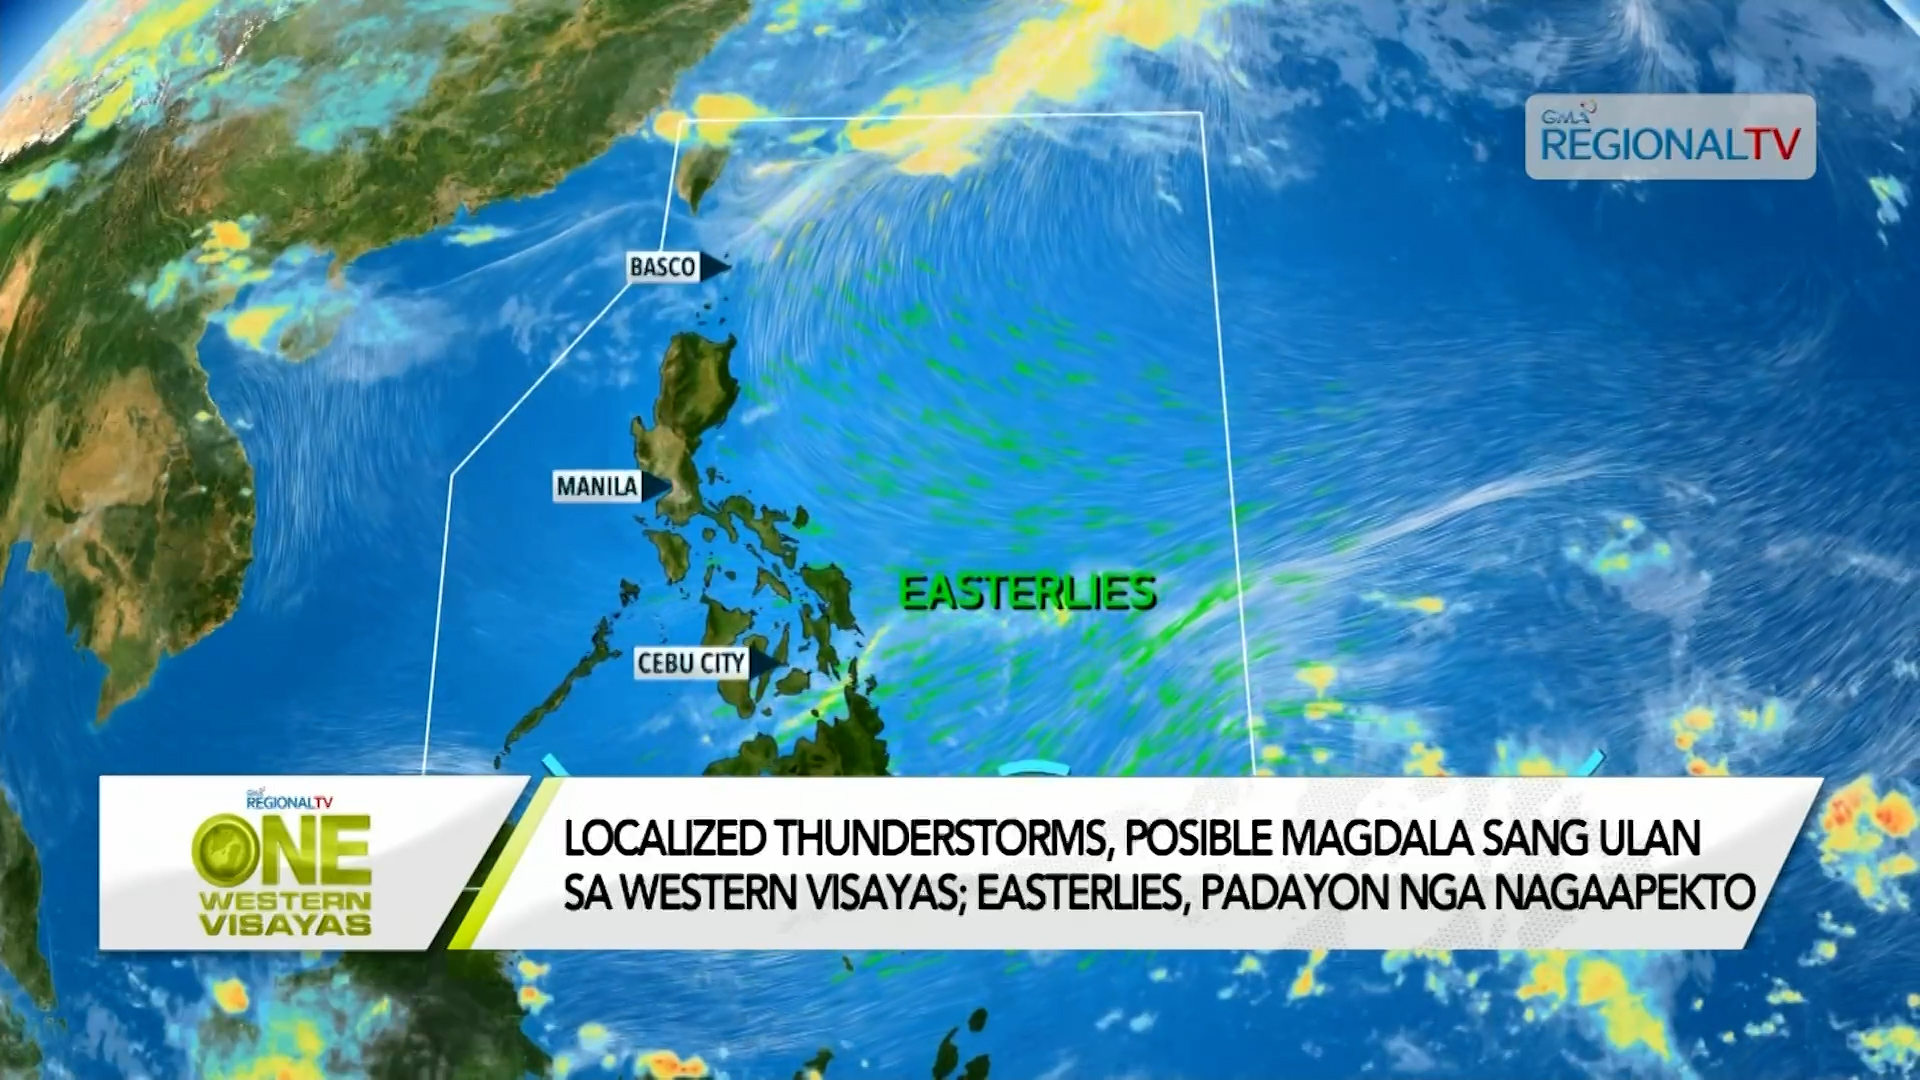 Localized thunderstorms, posible magdala sang ulan sa Eestern Visayas